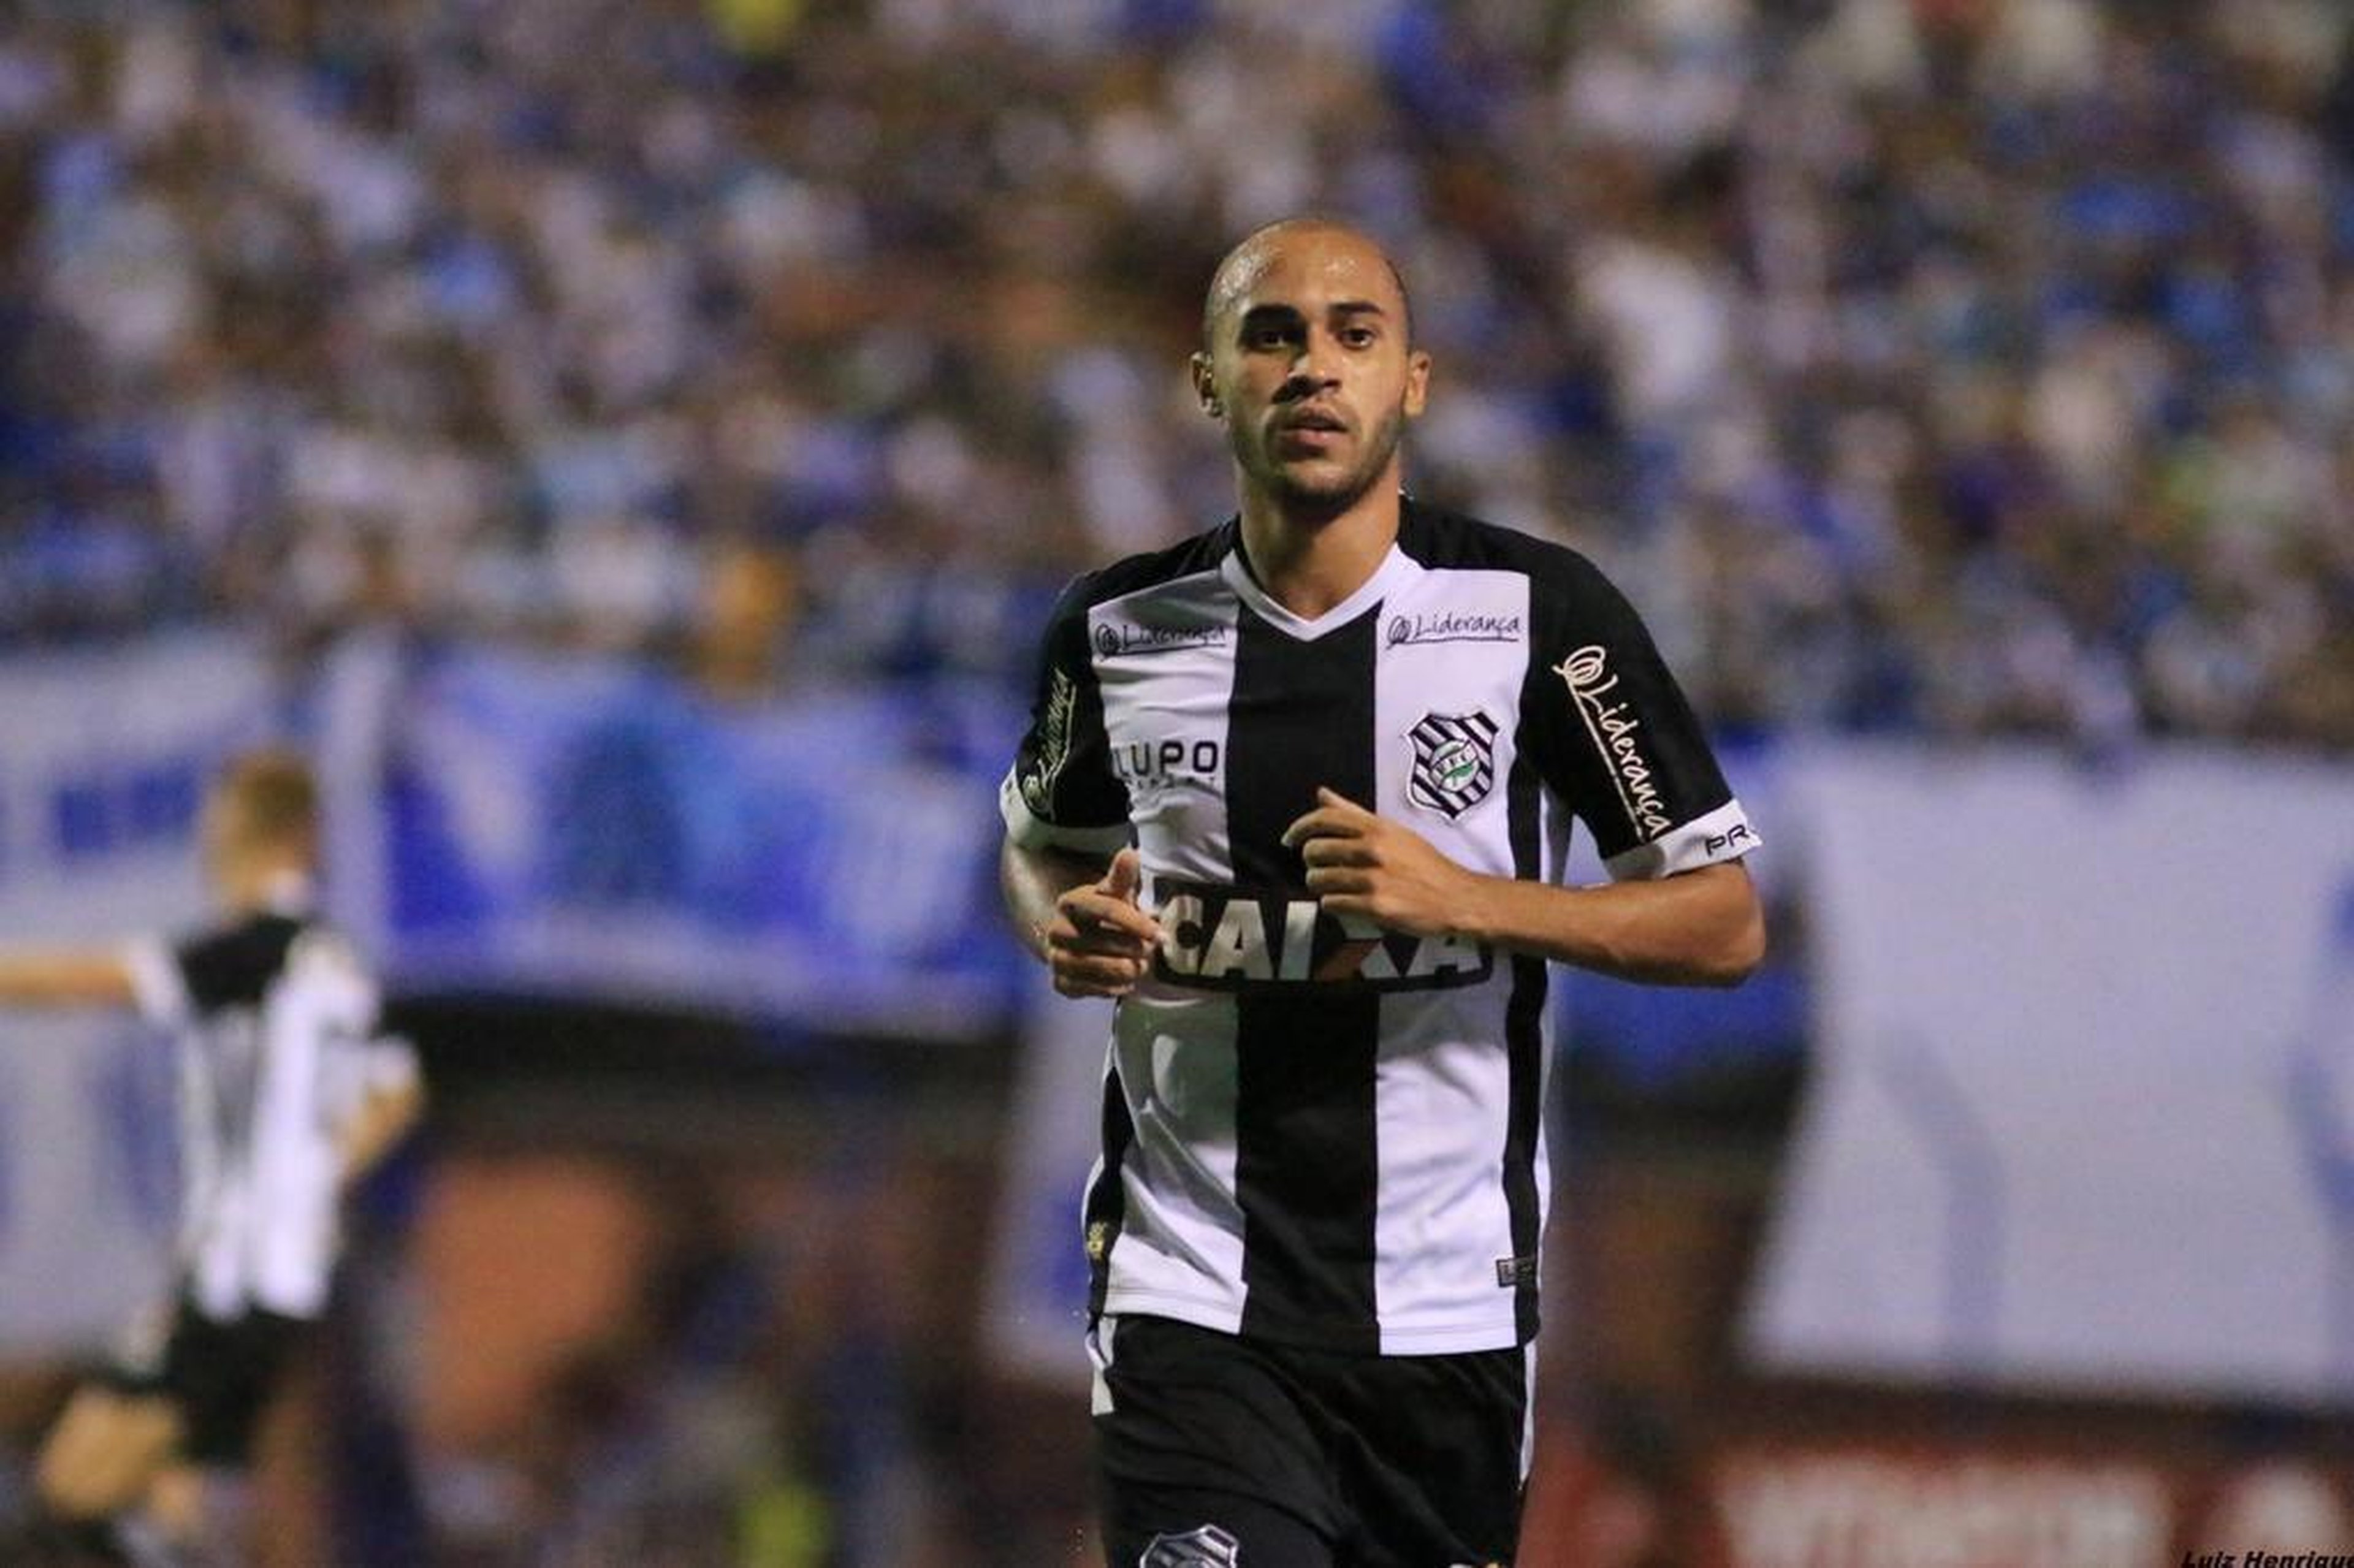 Luiz Henrique/F.F.C